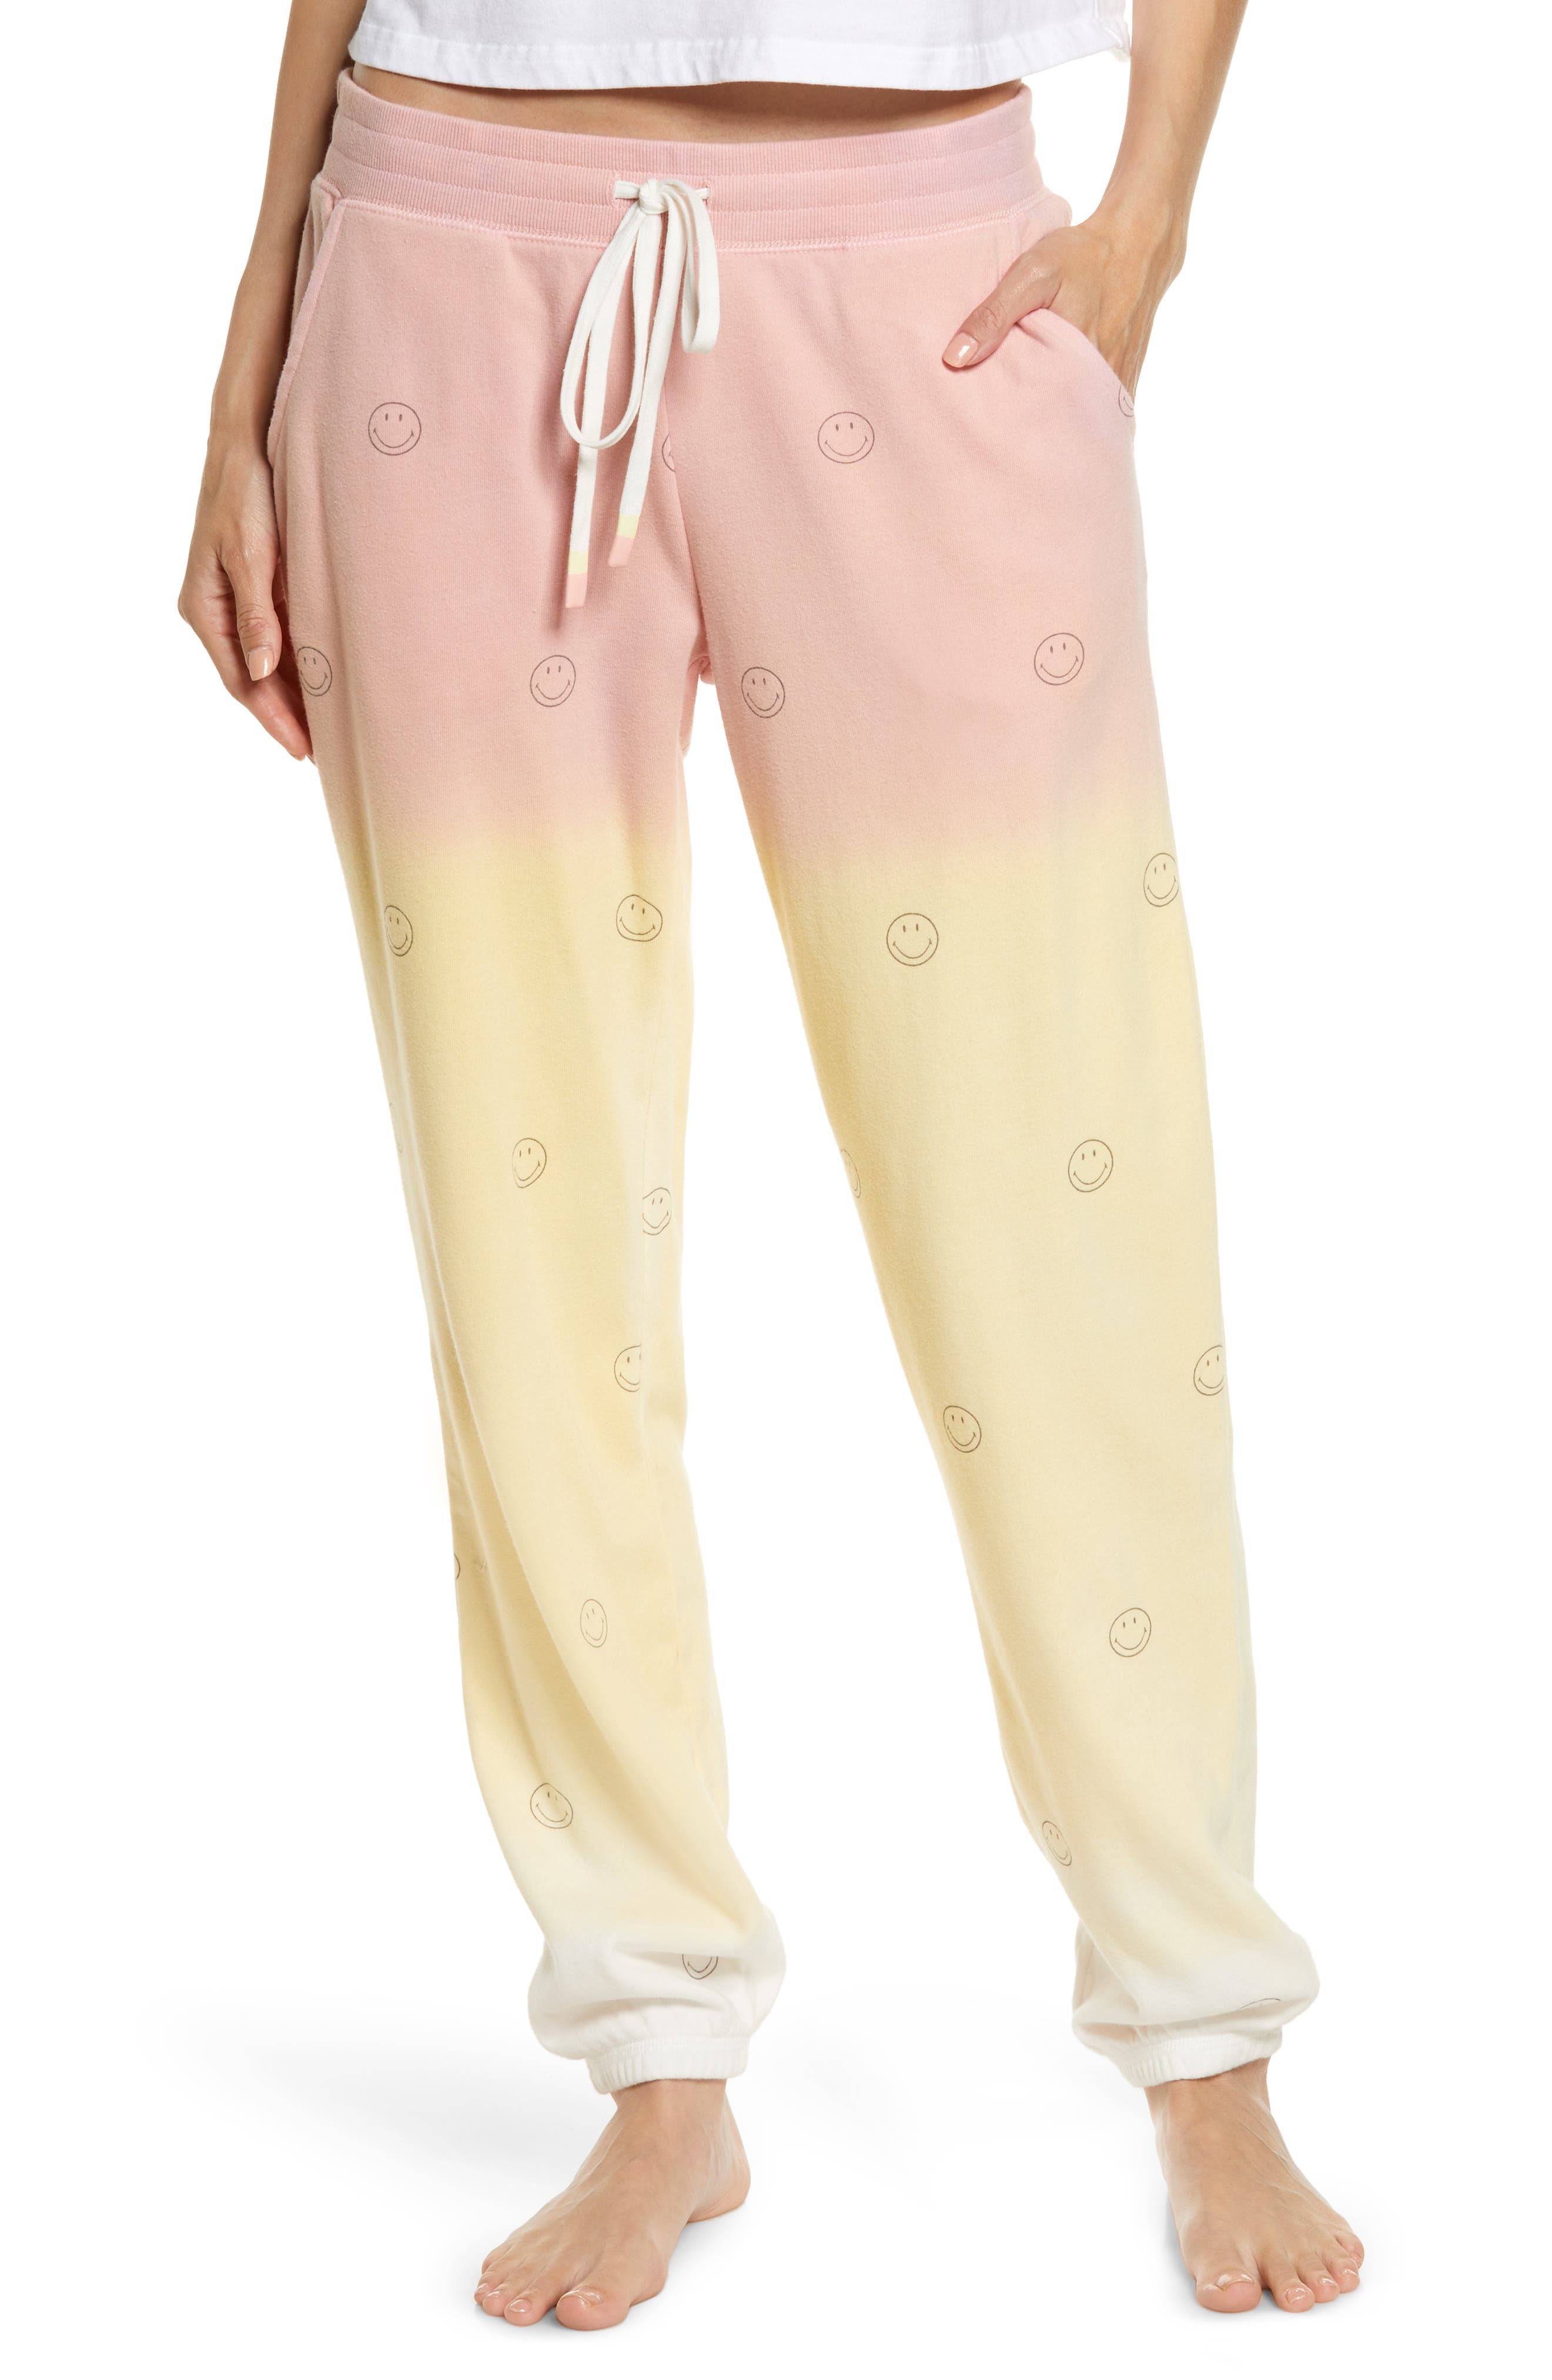 Kleding Dameskleding Pyjamas & Badjassen Pyjamashorts & Pyjamabroeken Broek PJ Salvage Winter Wear Frenchie Style Jogger Style Pajama Pants 